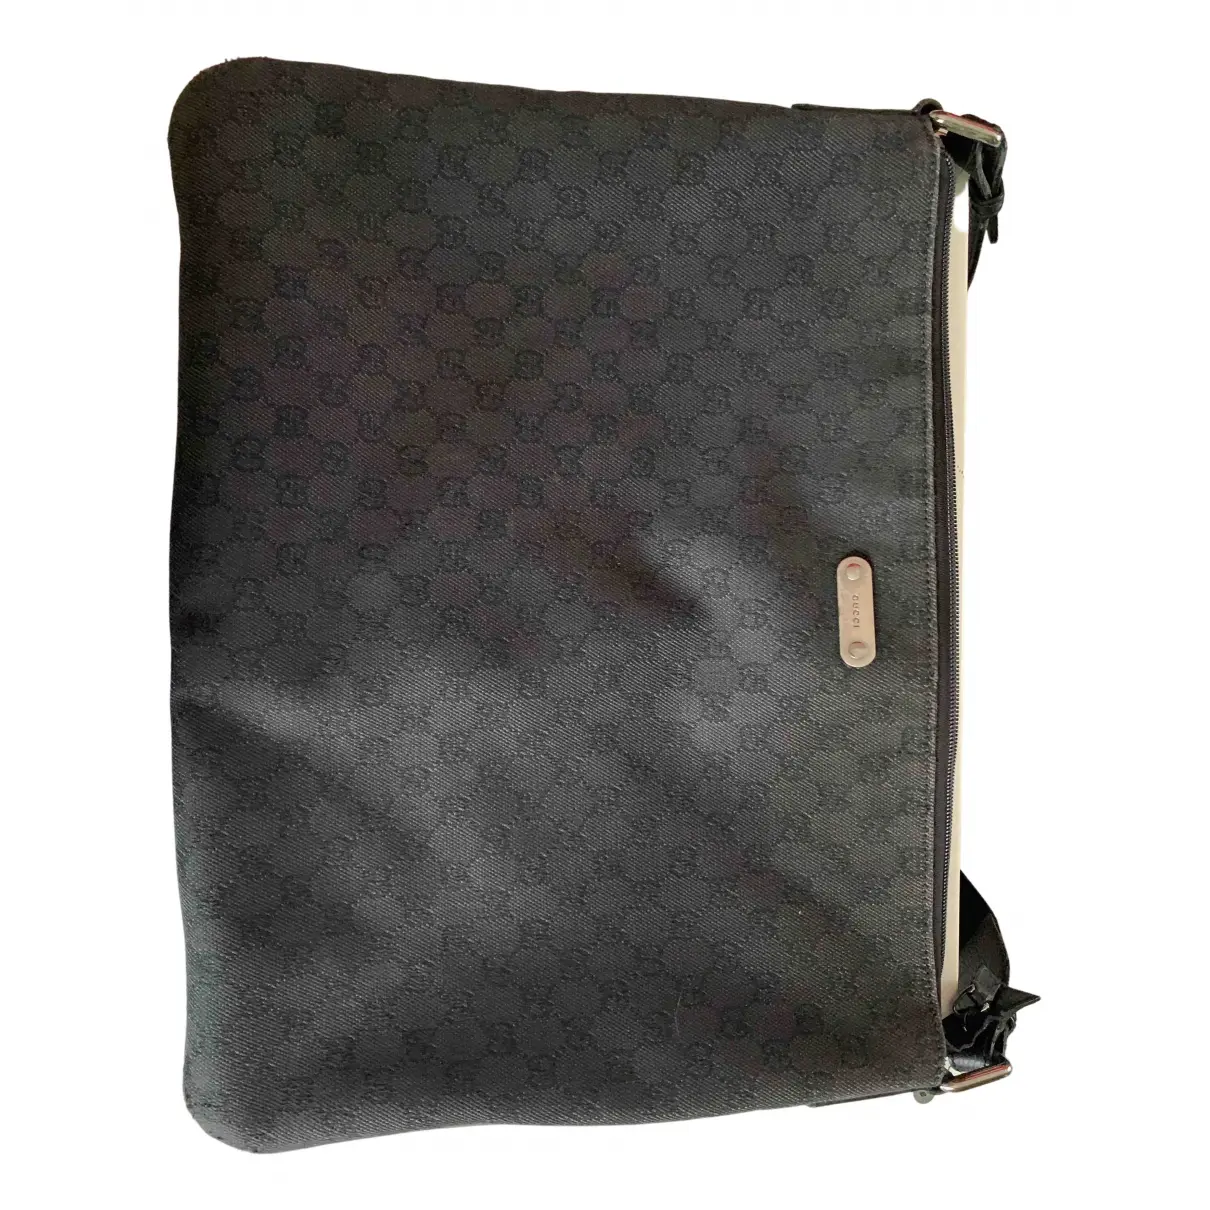 Buy Gucci Cloth satchel online